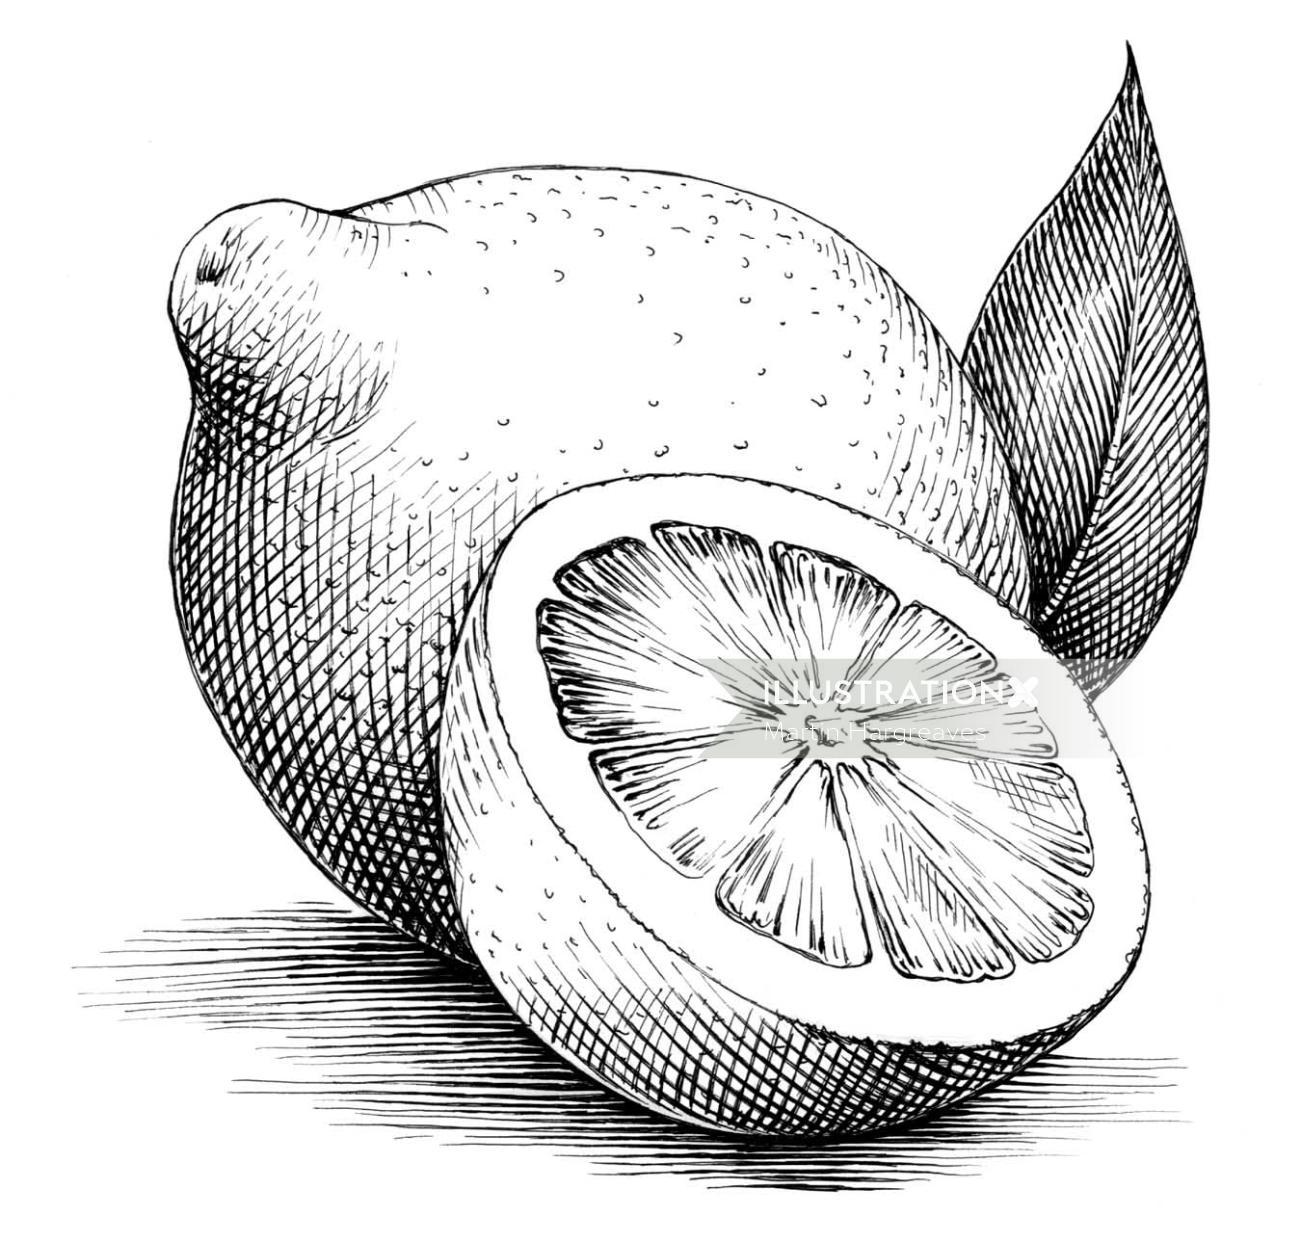 Line drawing of Lemons 